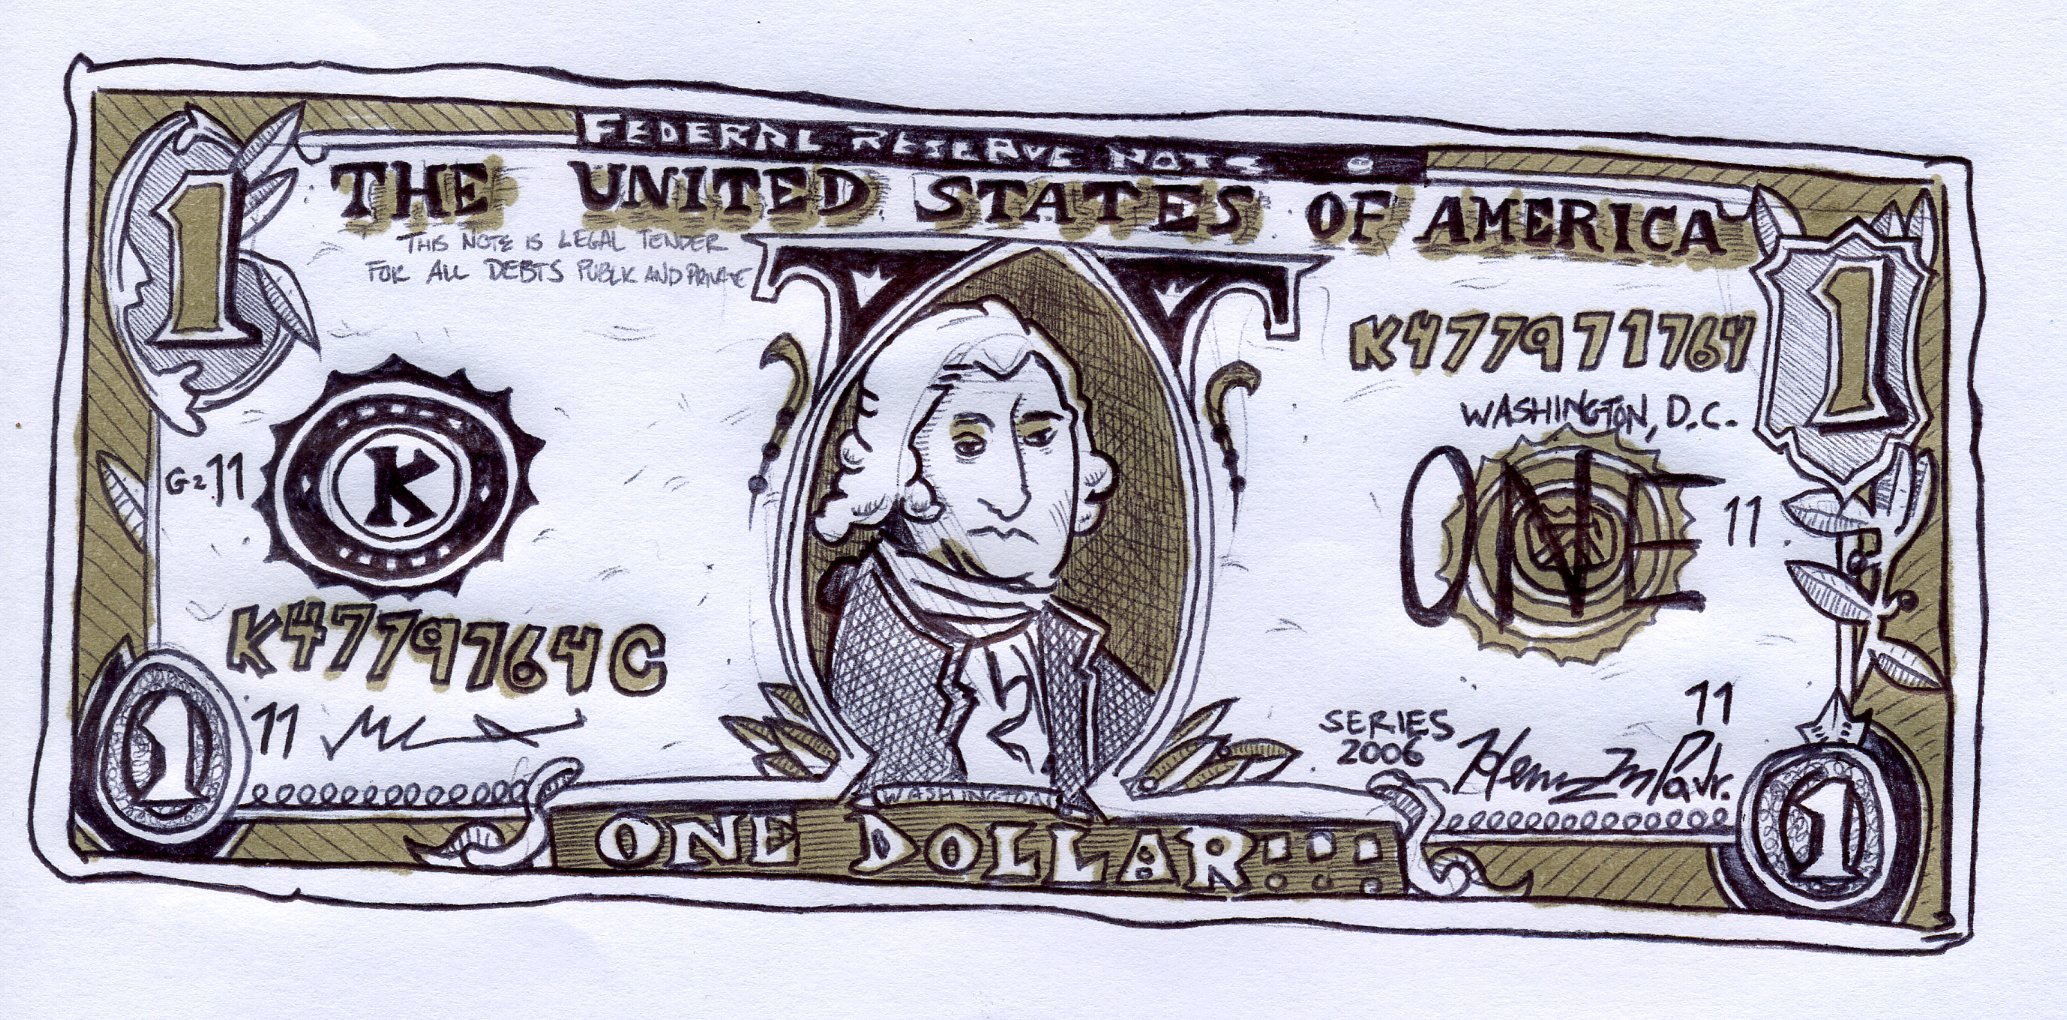 Доллар рисунок